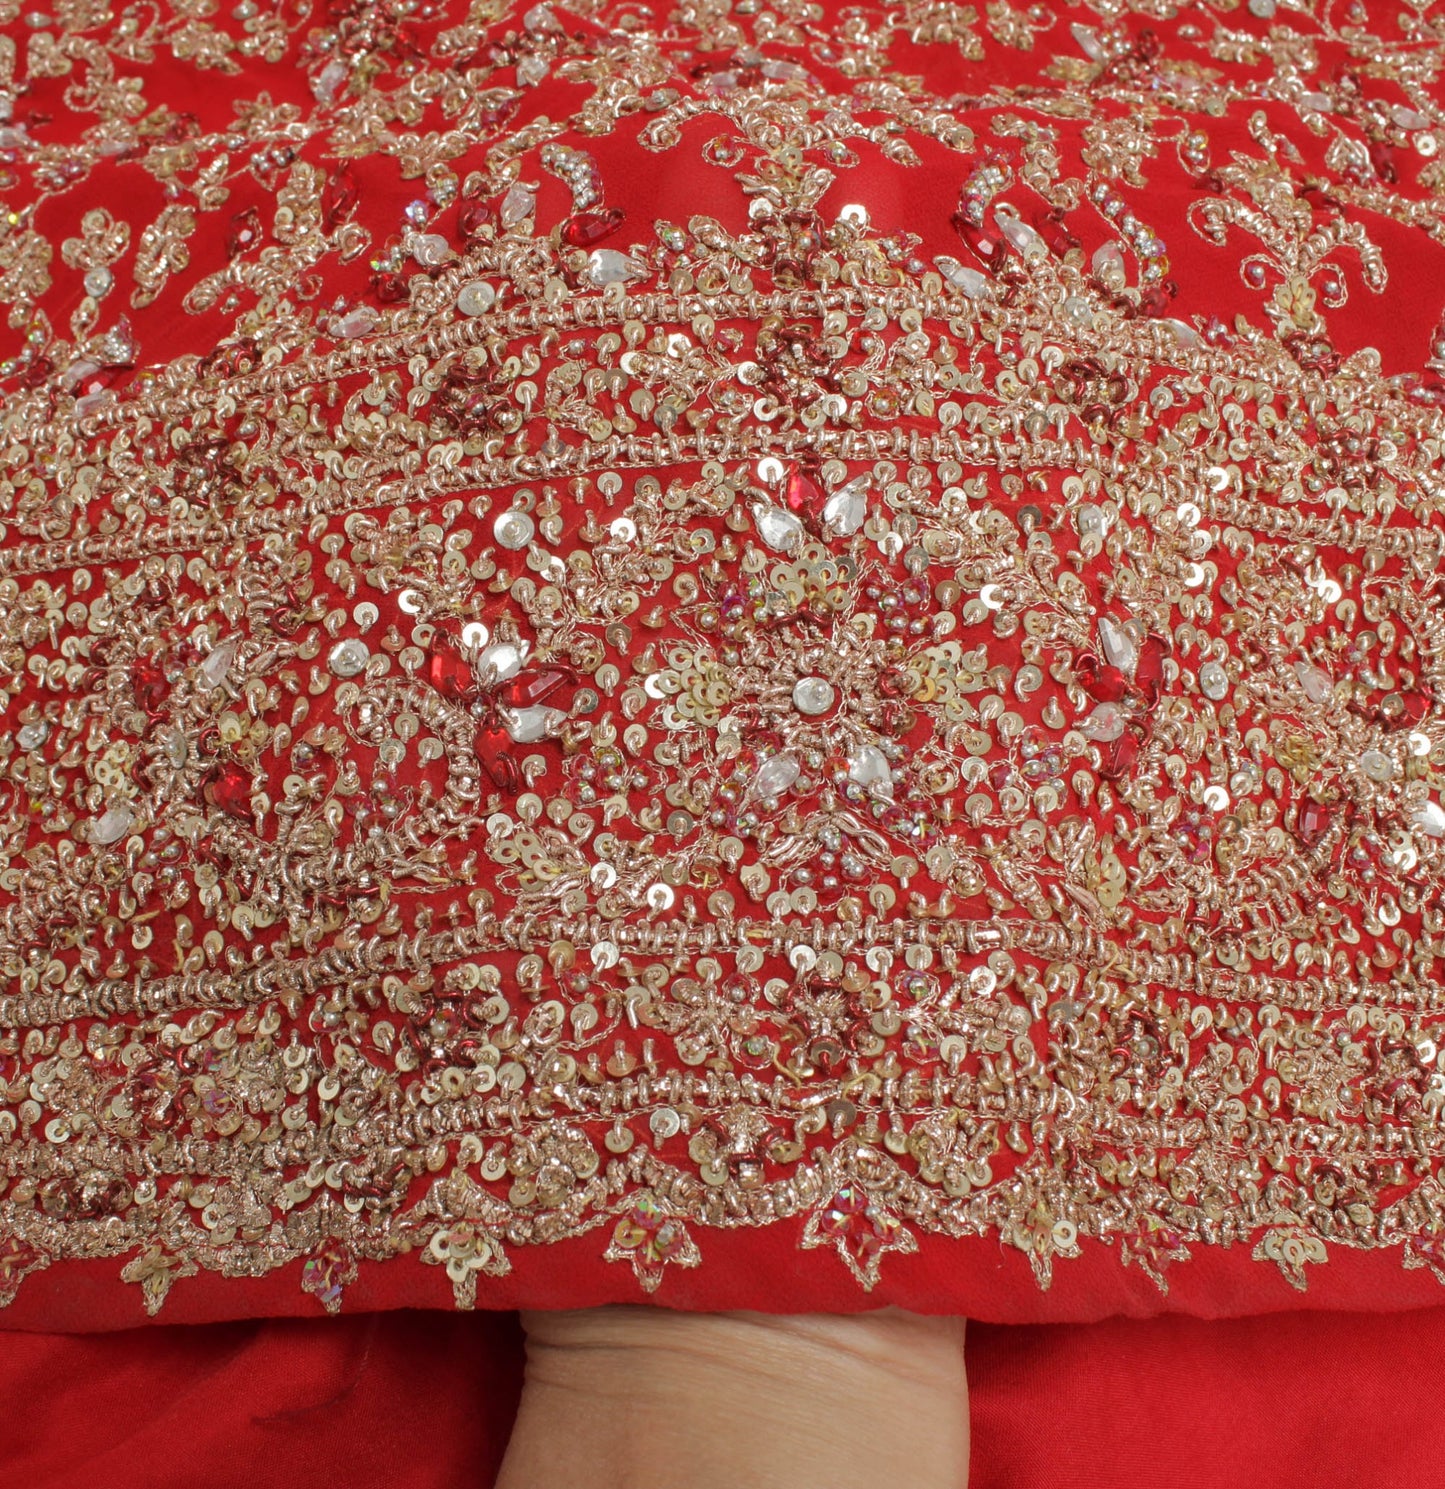 Sushila Vintage Red Long Skirt Blend Georgette Hand Beaded Semi Stitched Lehenga